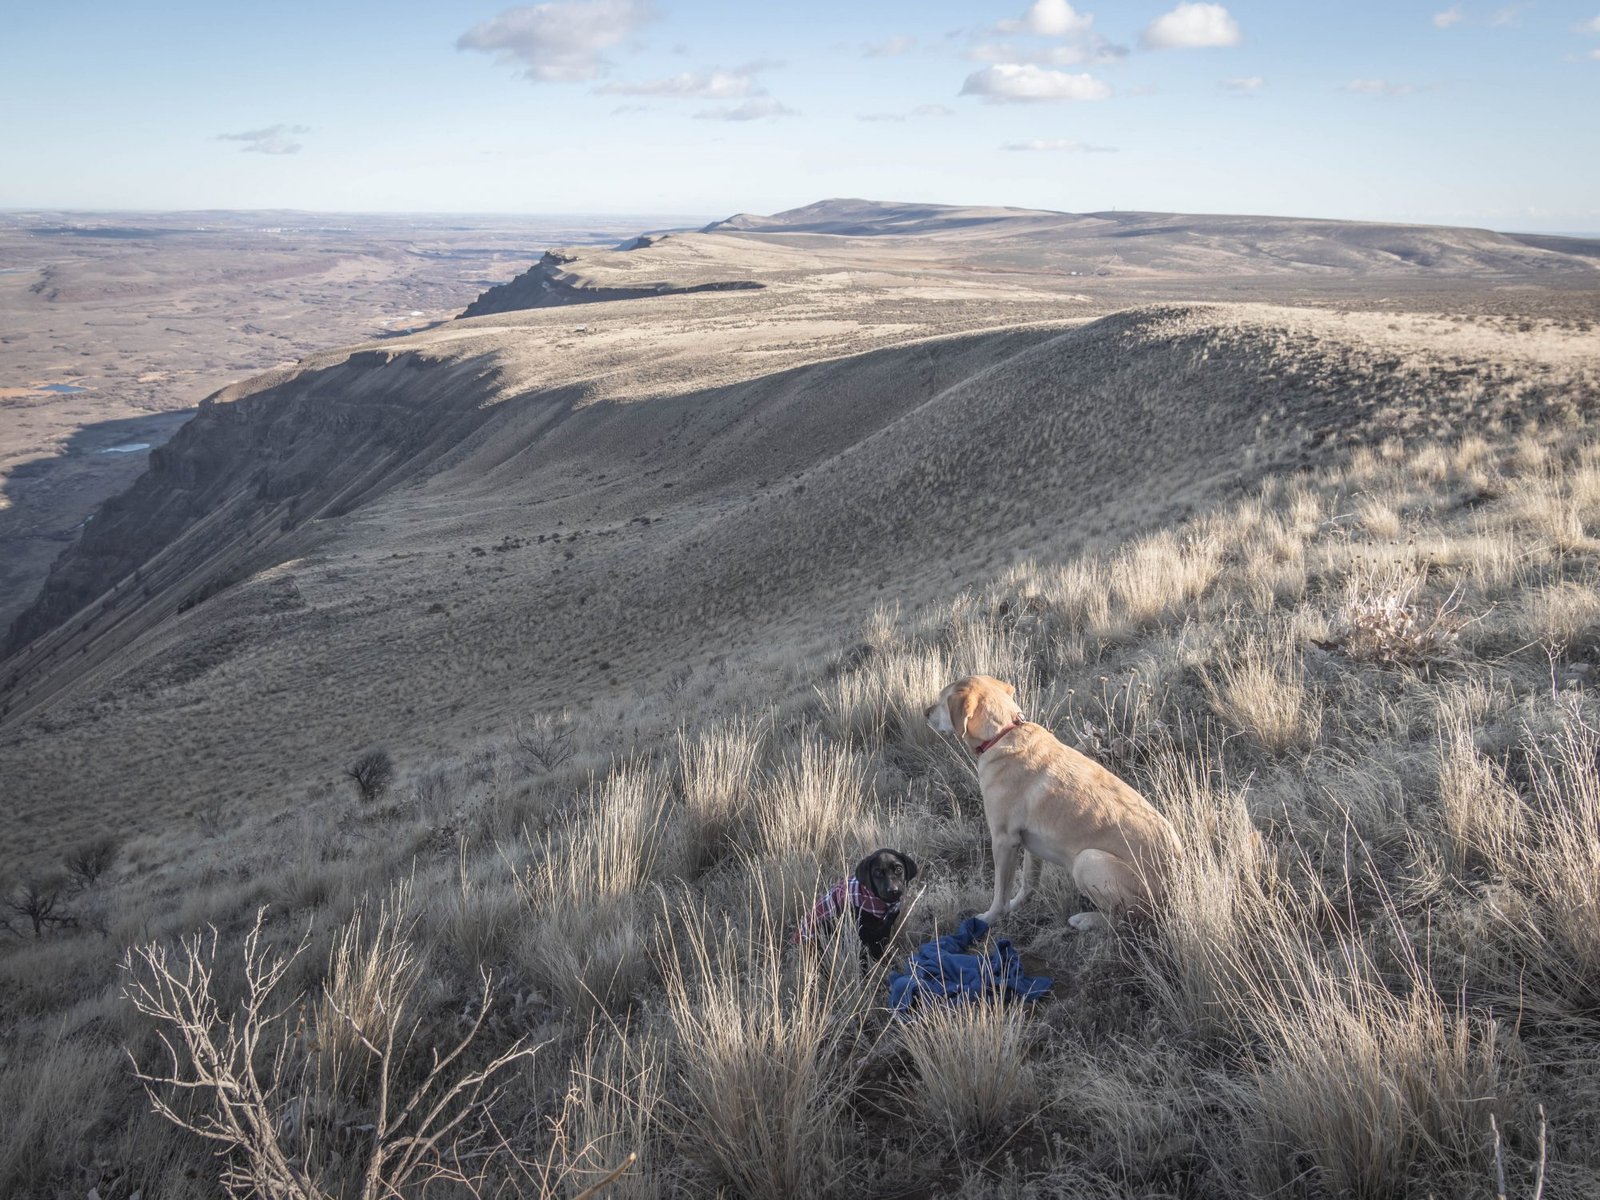 Desert dogs on Sentinel Mountain